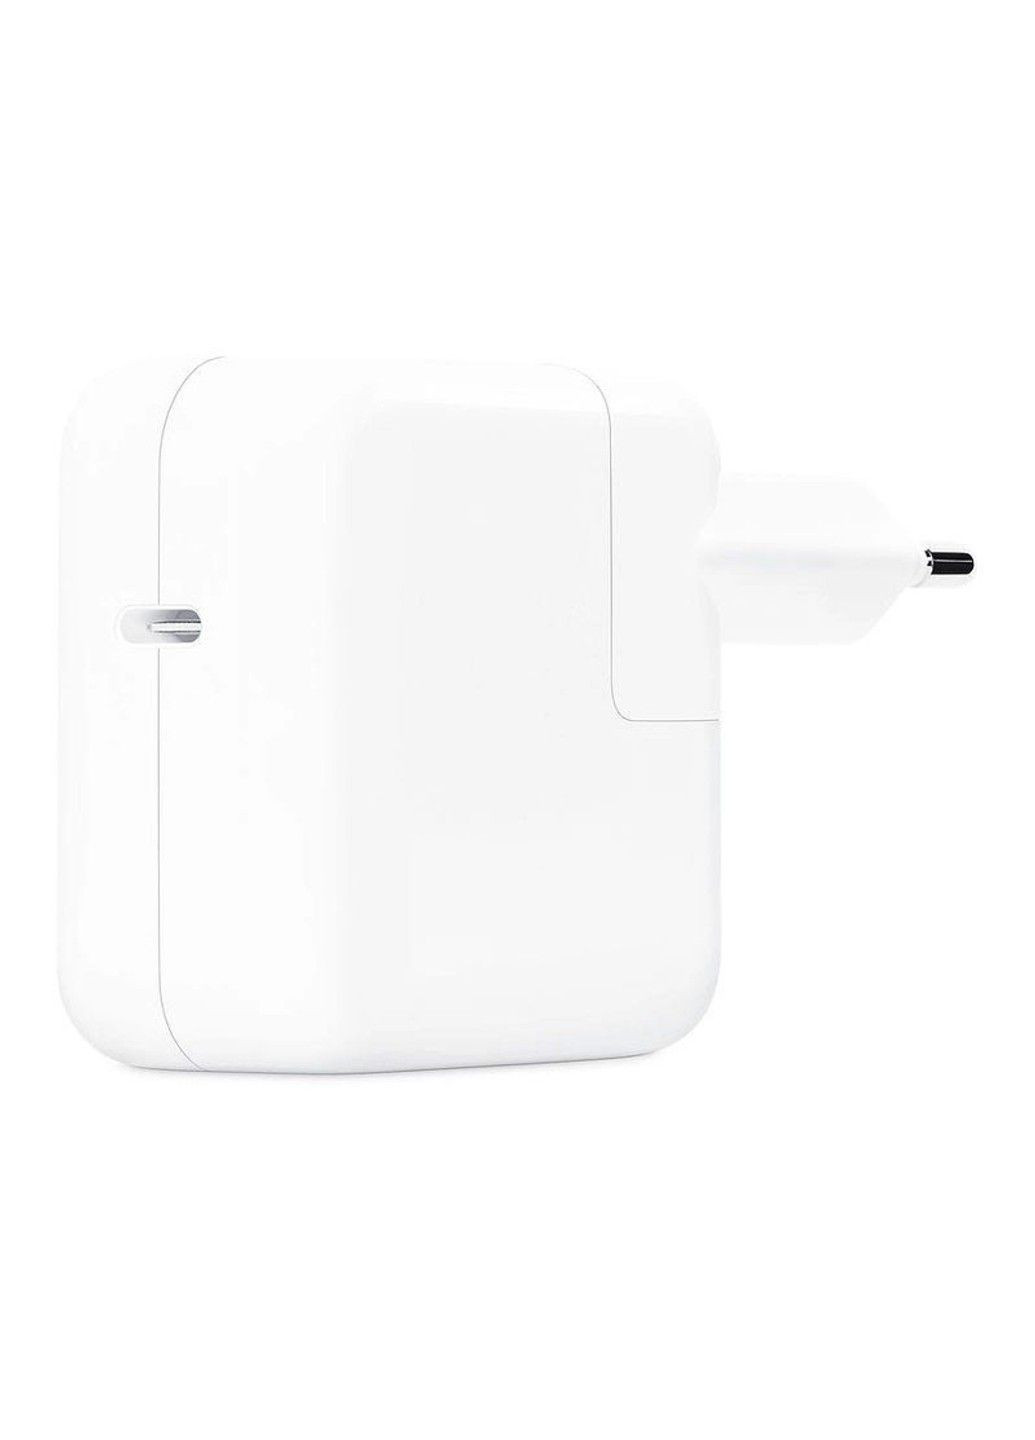 Уценка СЗУ 30W USB-C Power Adapter for Apple (AAA) (box) Brand_A_Class (291881635)